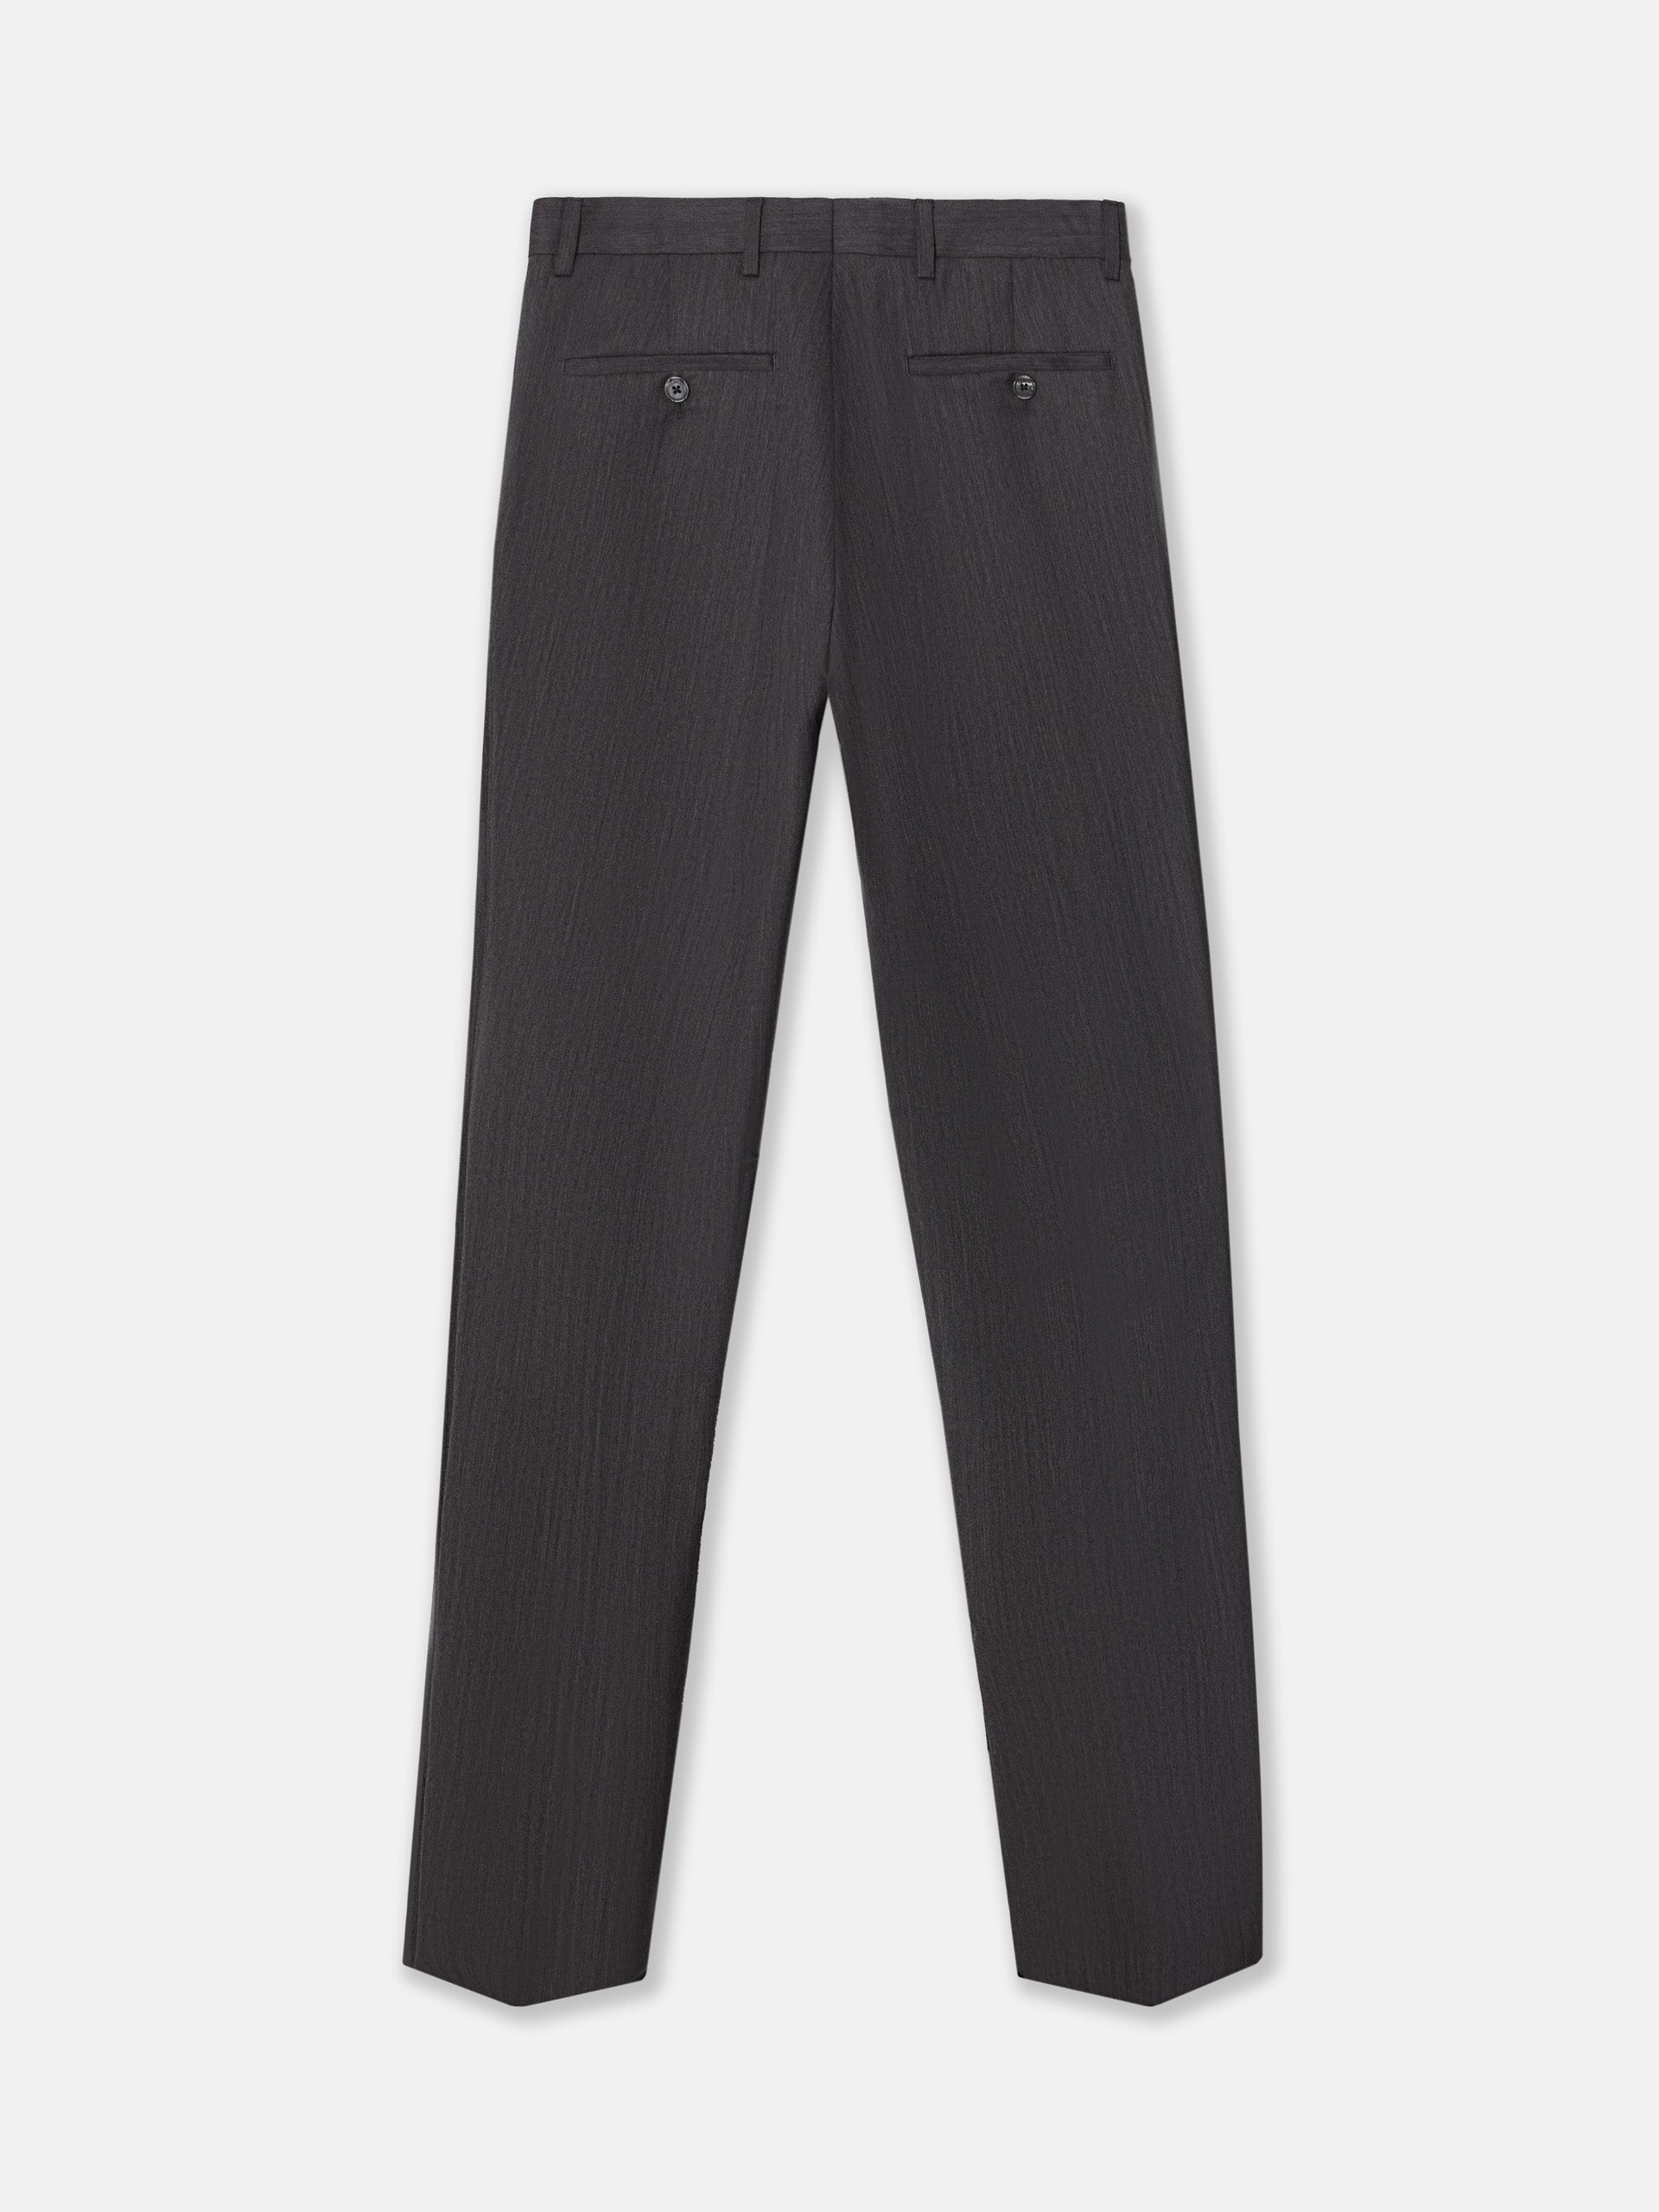 Pantalon traje clasico espiga gris